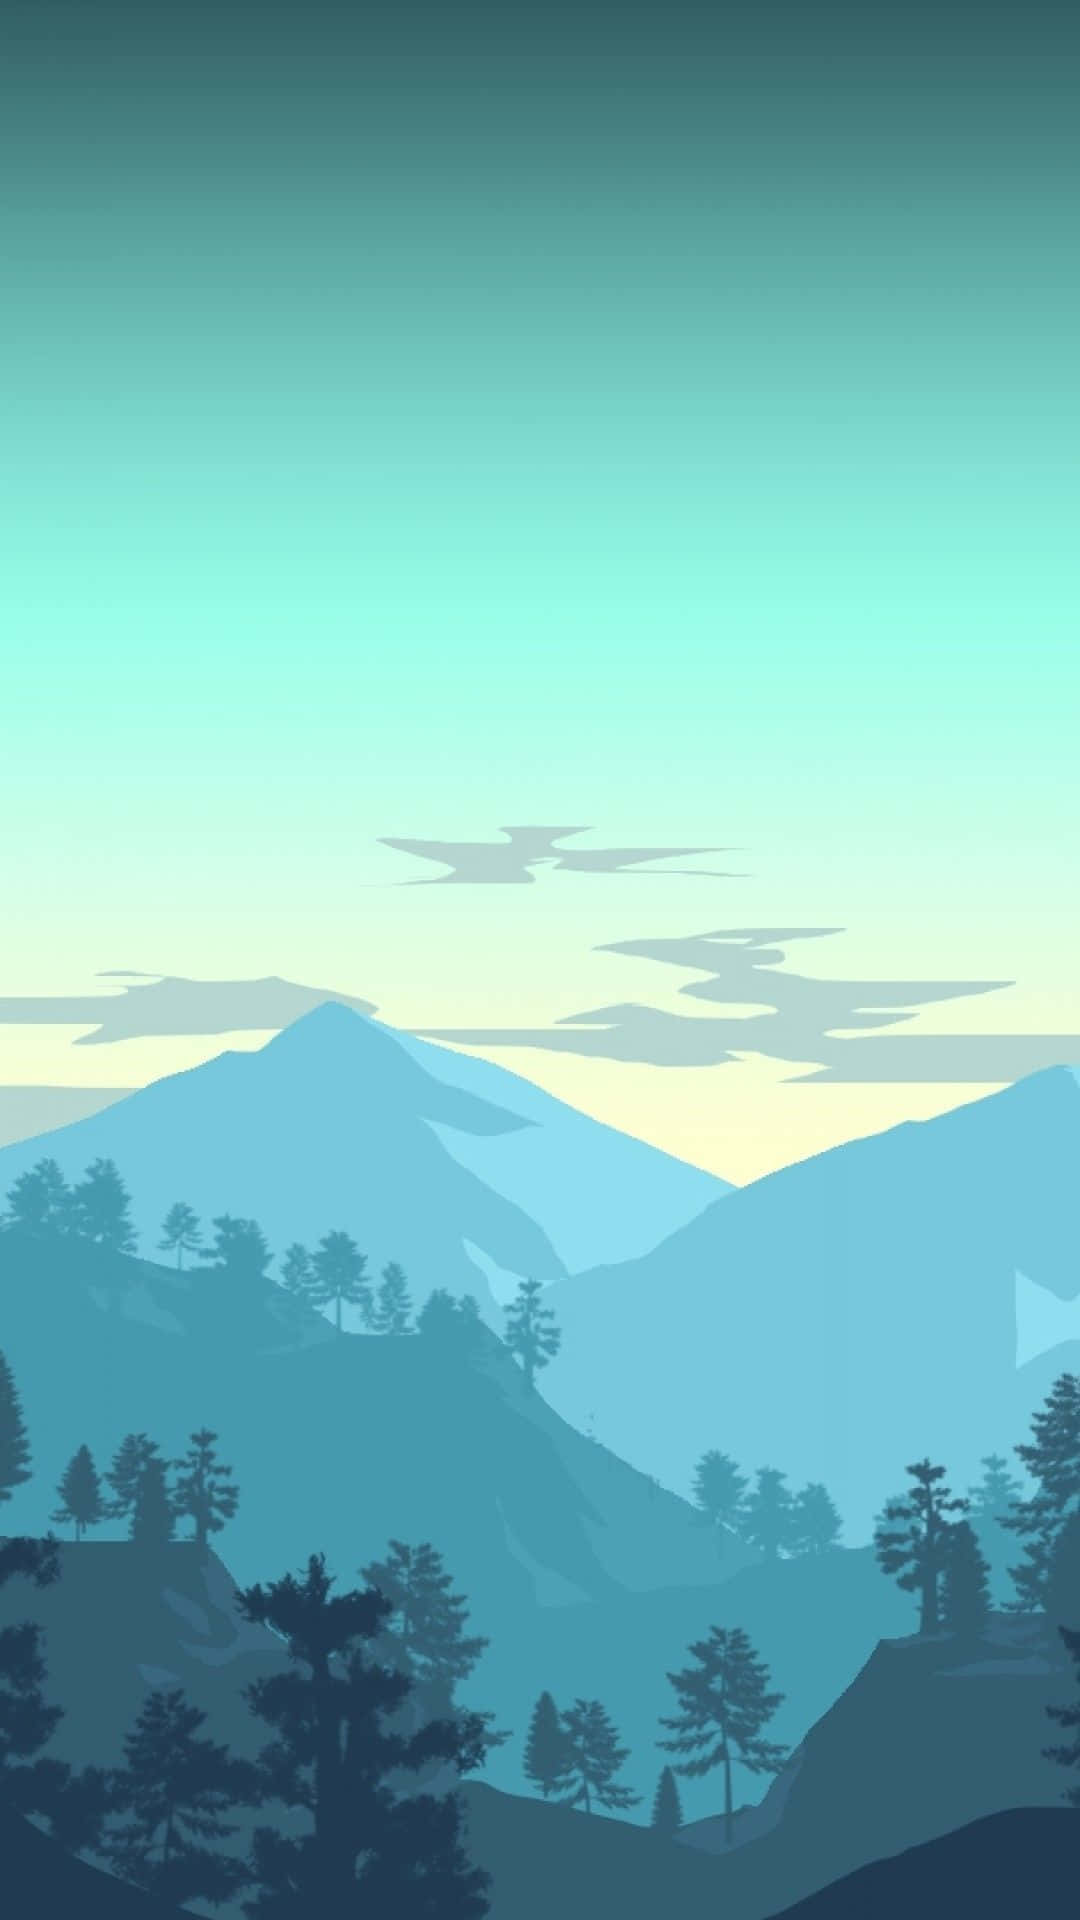 Minimalist IPhone X Blue Mountains Digital Art Wallpaper